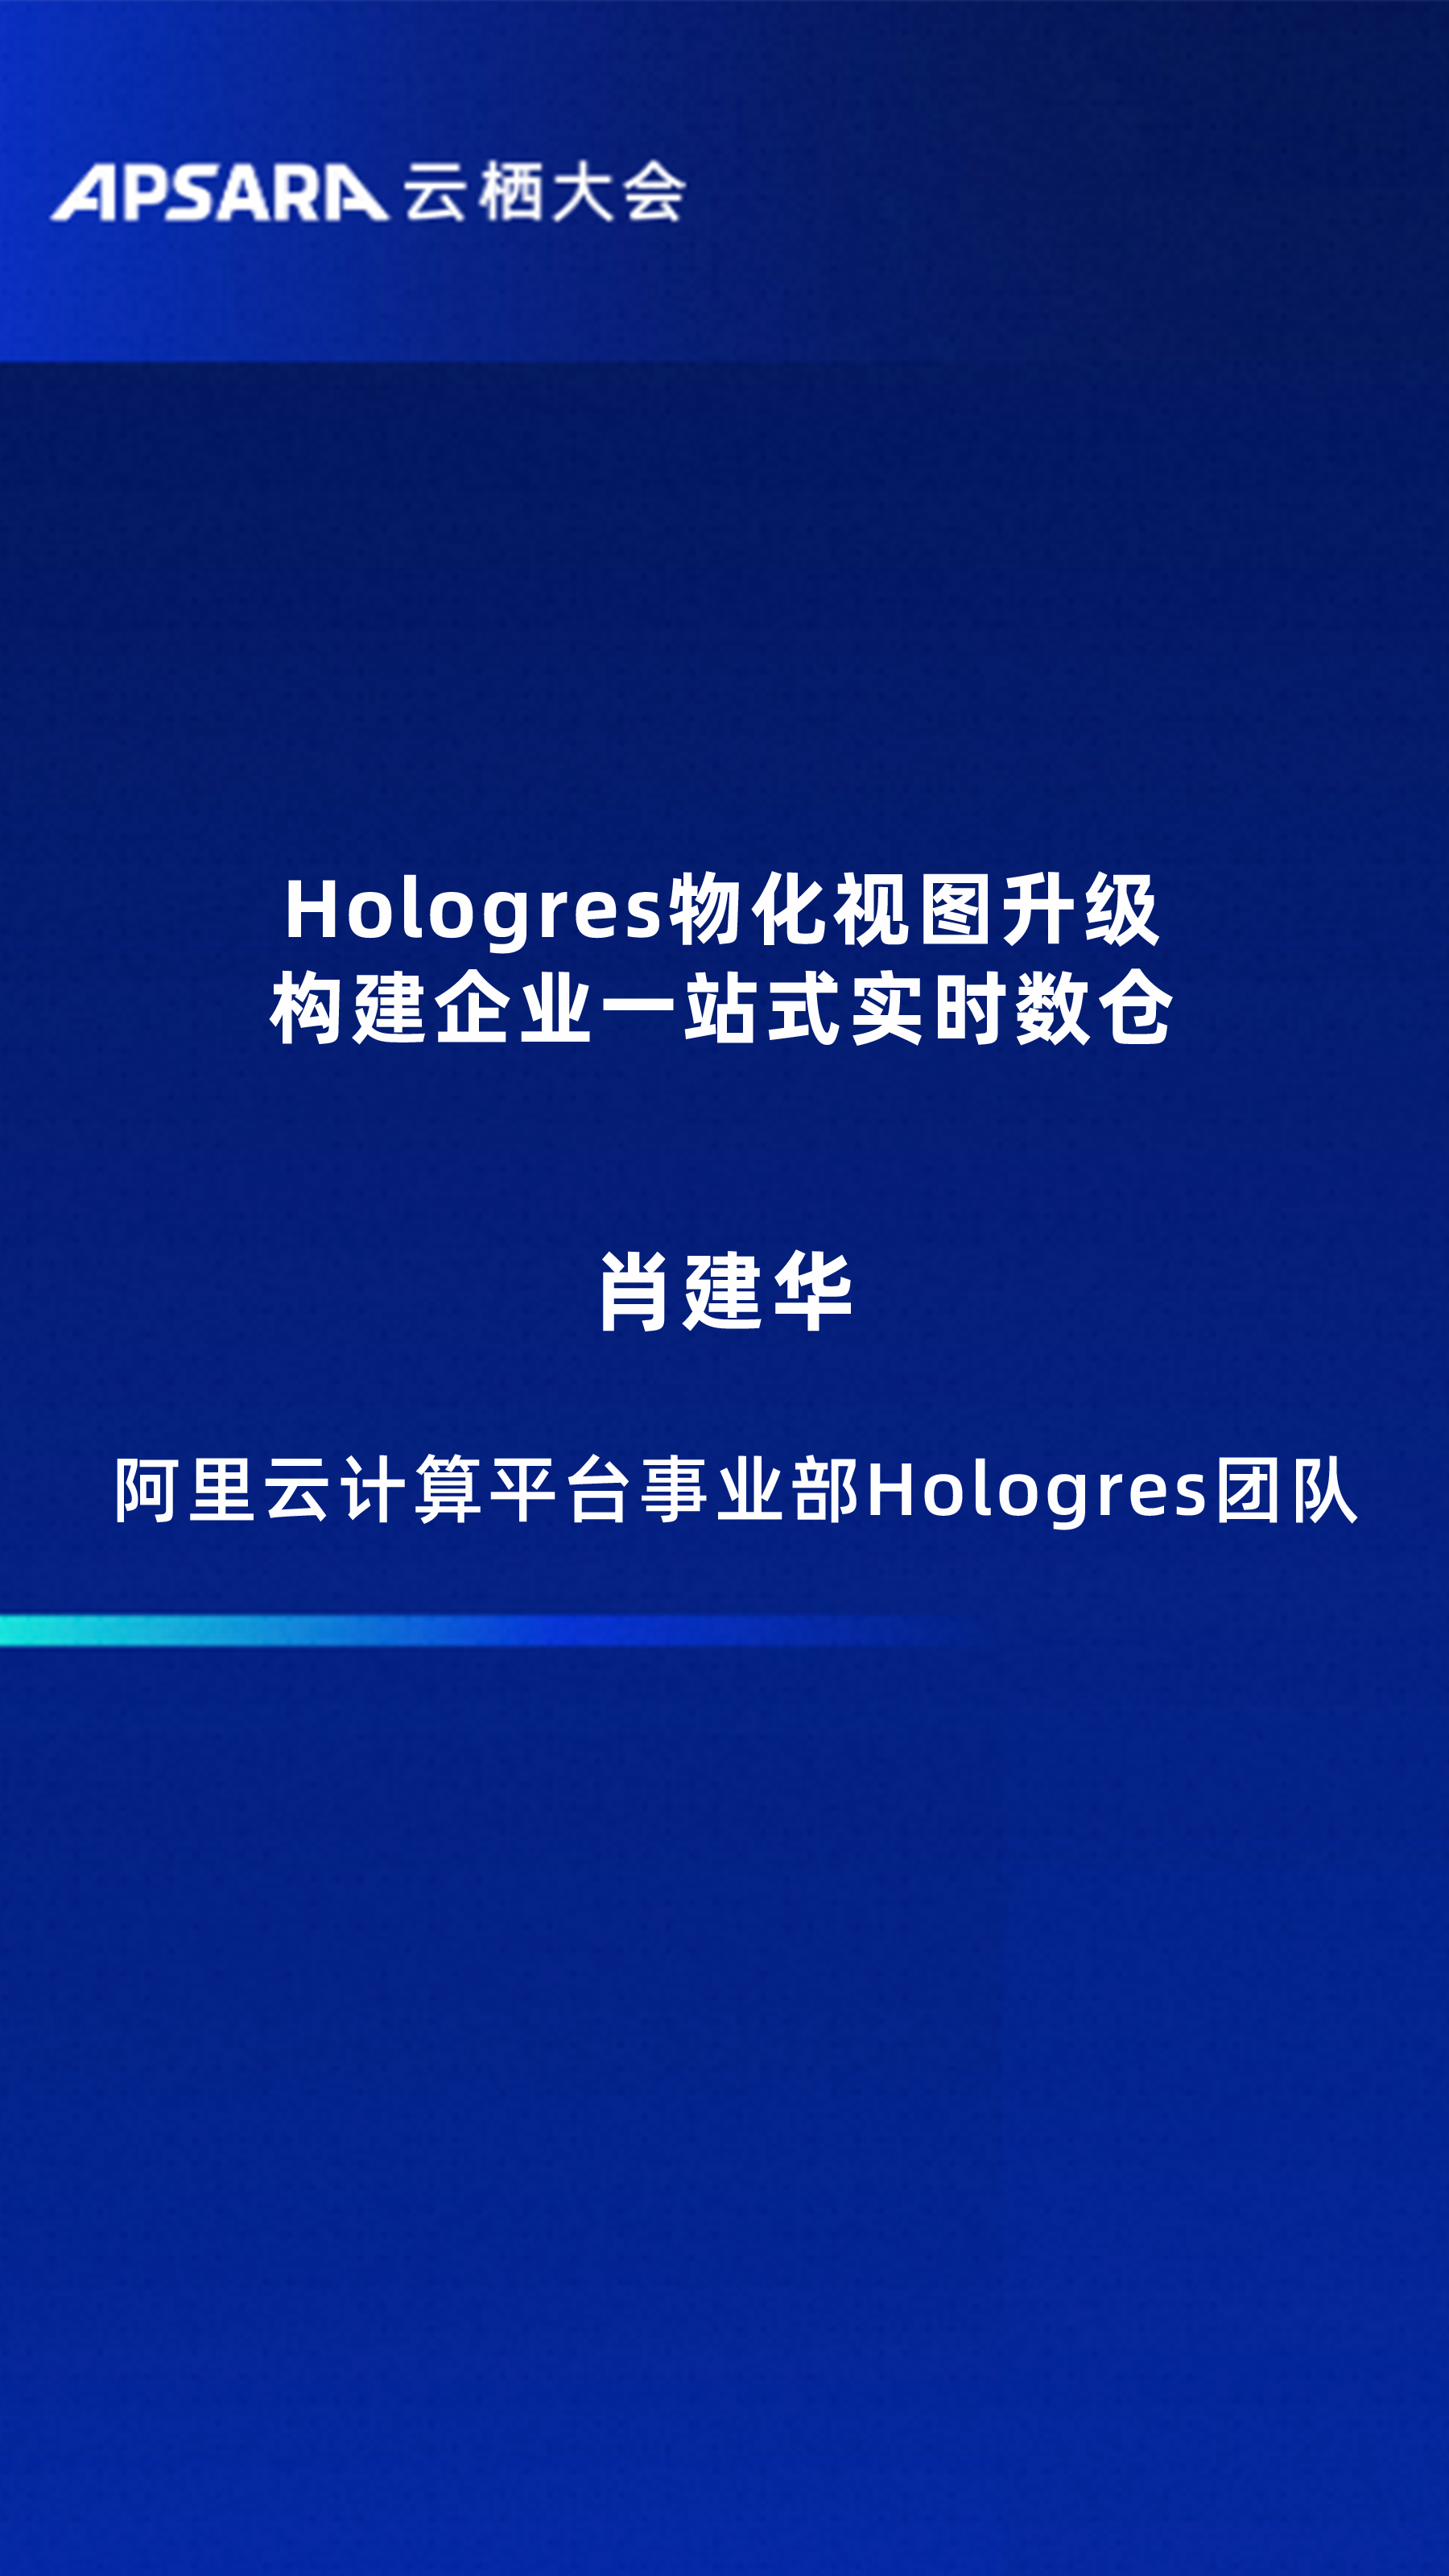 Hologres物化视图升级 构建企业一站式实时数仓 